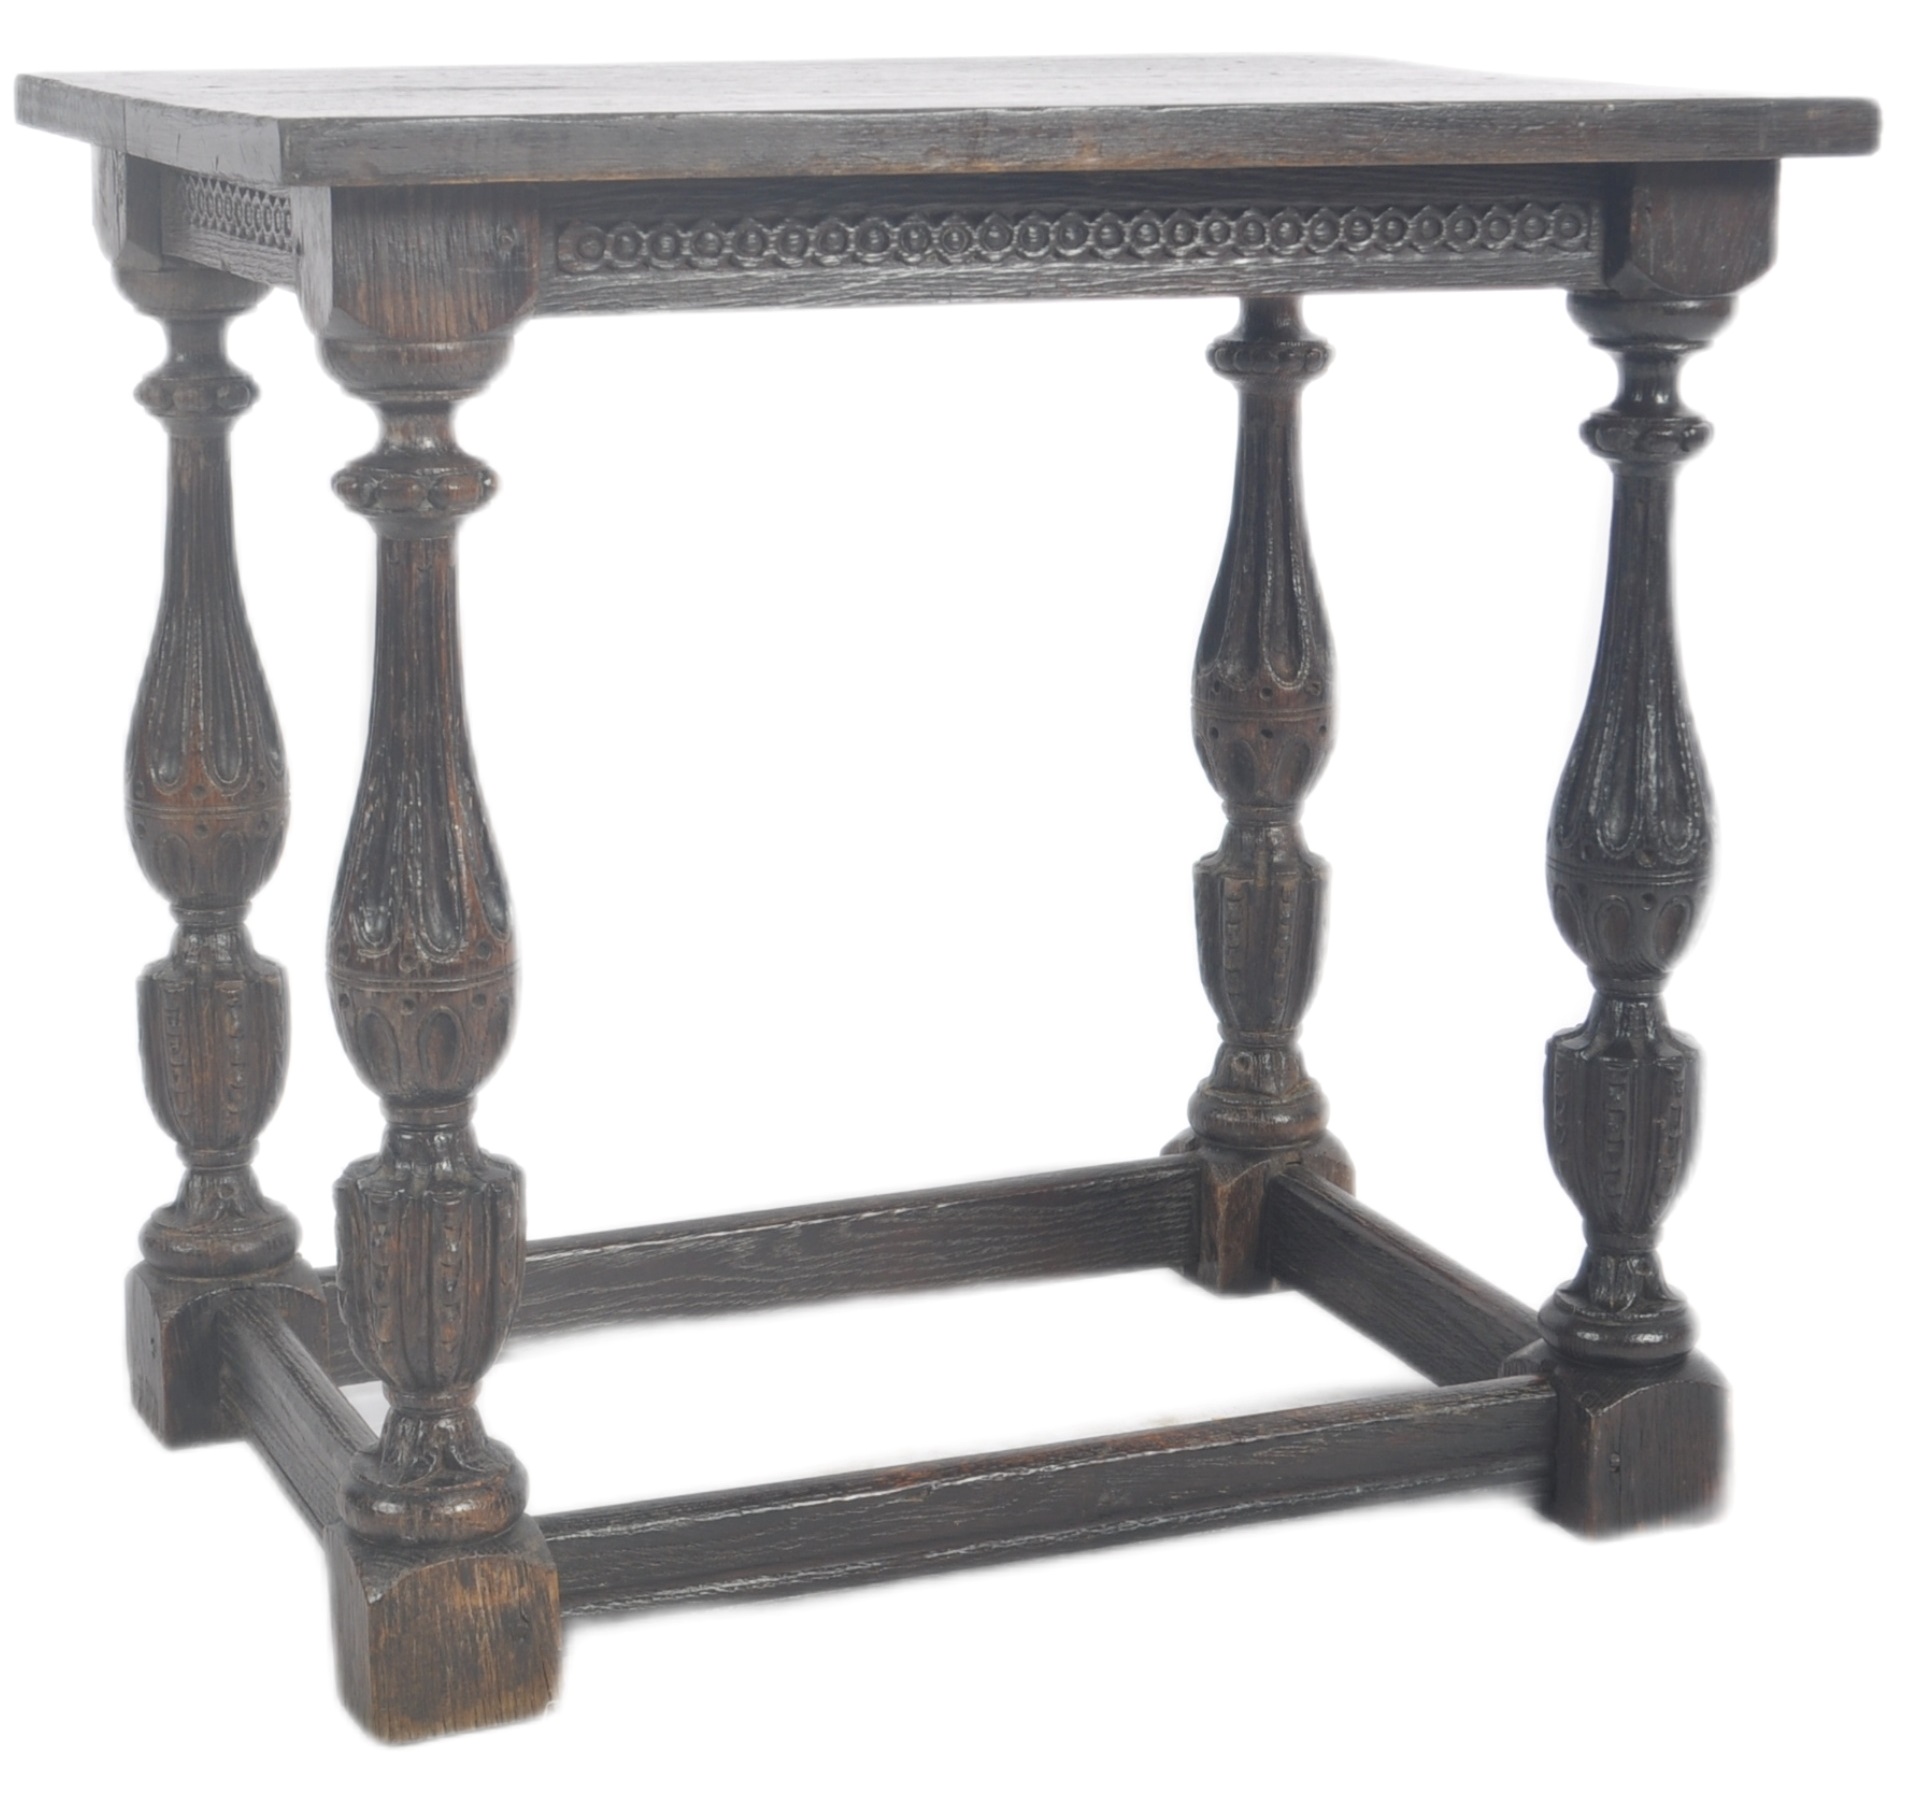 16TH CENTURY TUDOR CARVED OAK SIDE LOWBOY TABLE